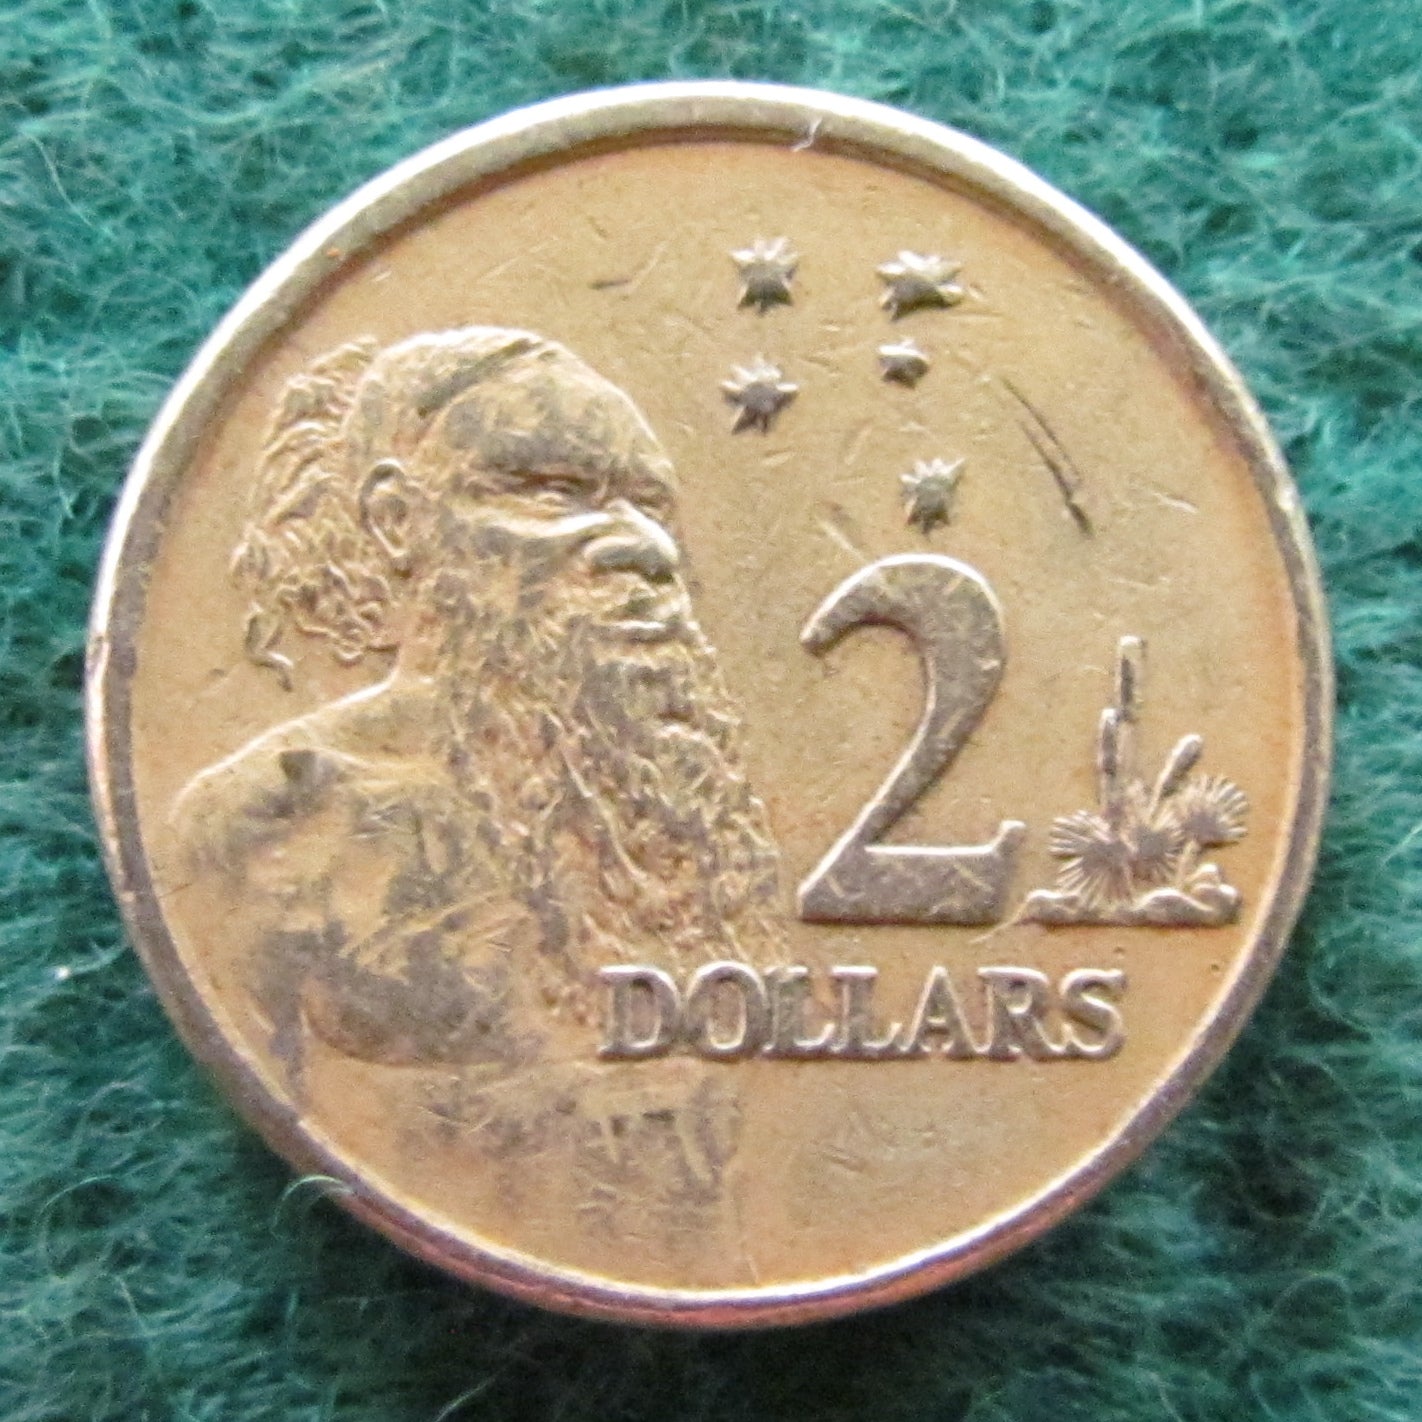 Australian 2000 2 Dollar Aboriginal Elder Queen Elizabeth Coin - Circulated